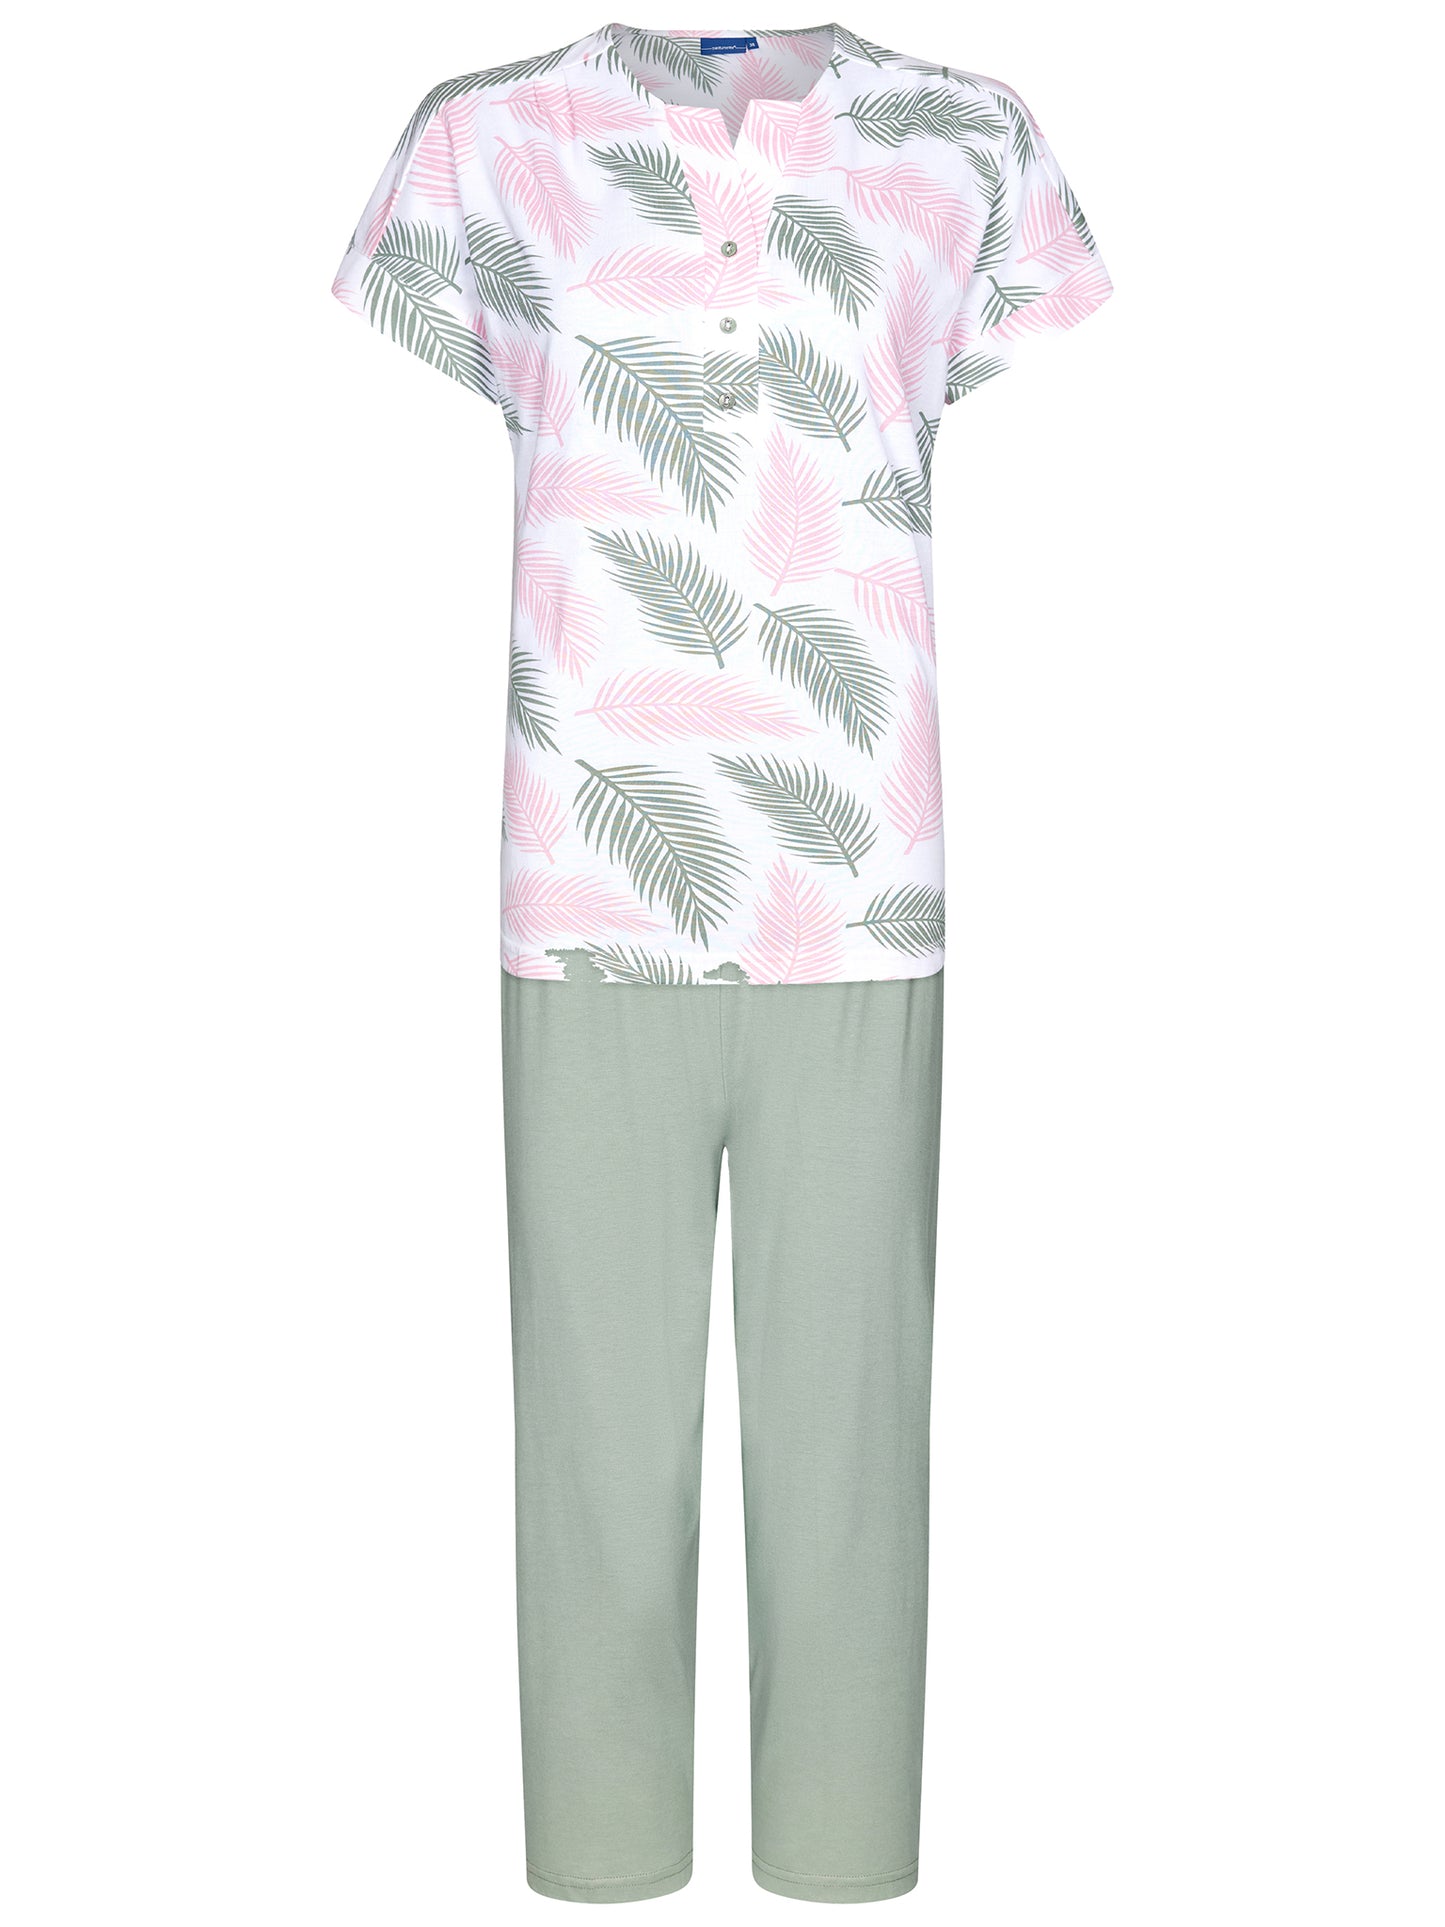 Pyjama capri broek 20241-154-4 203 light pink